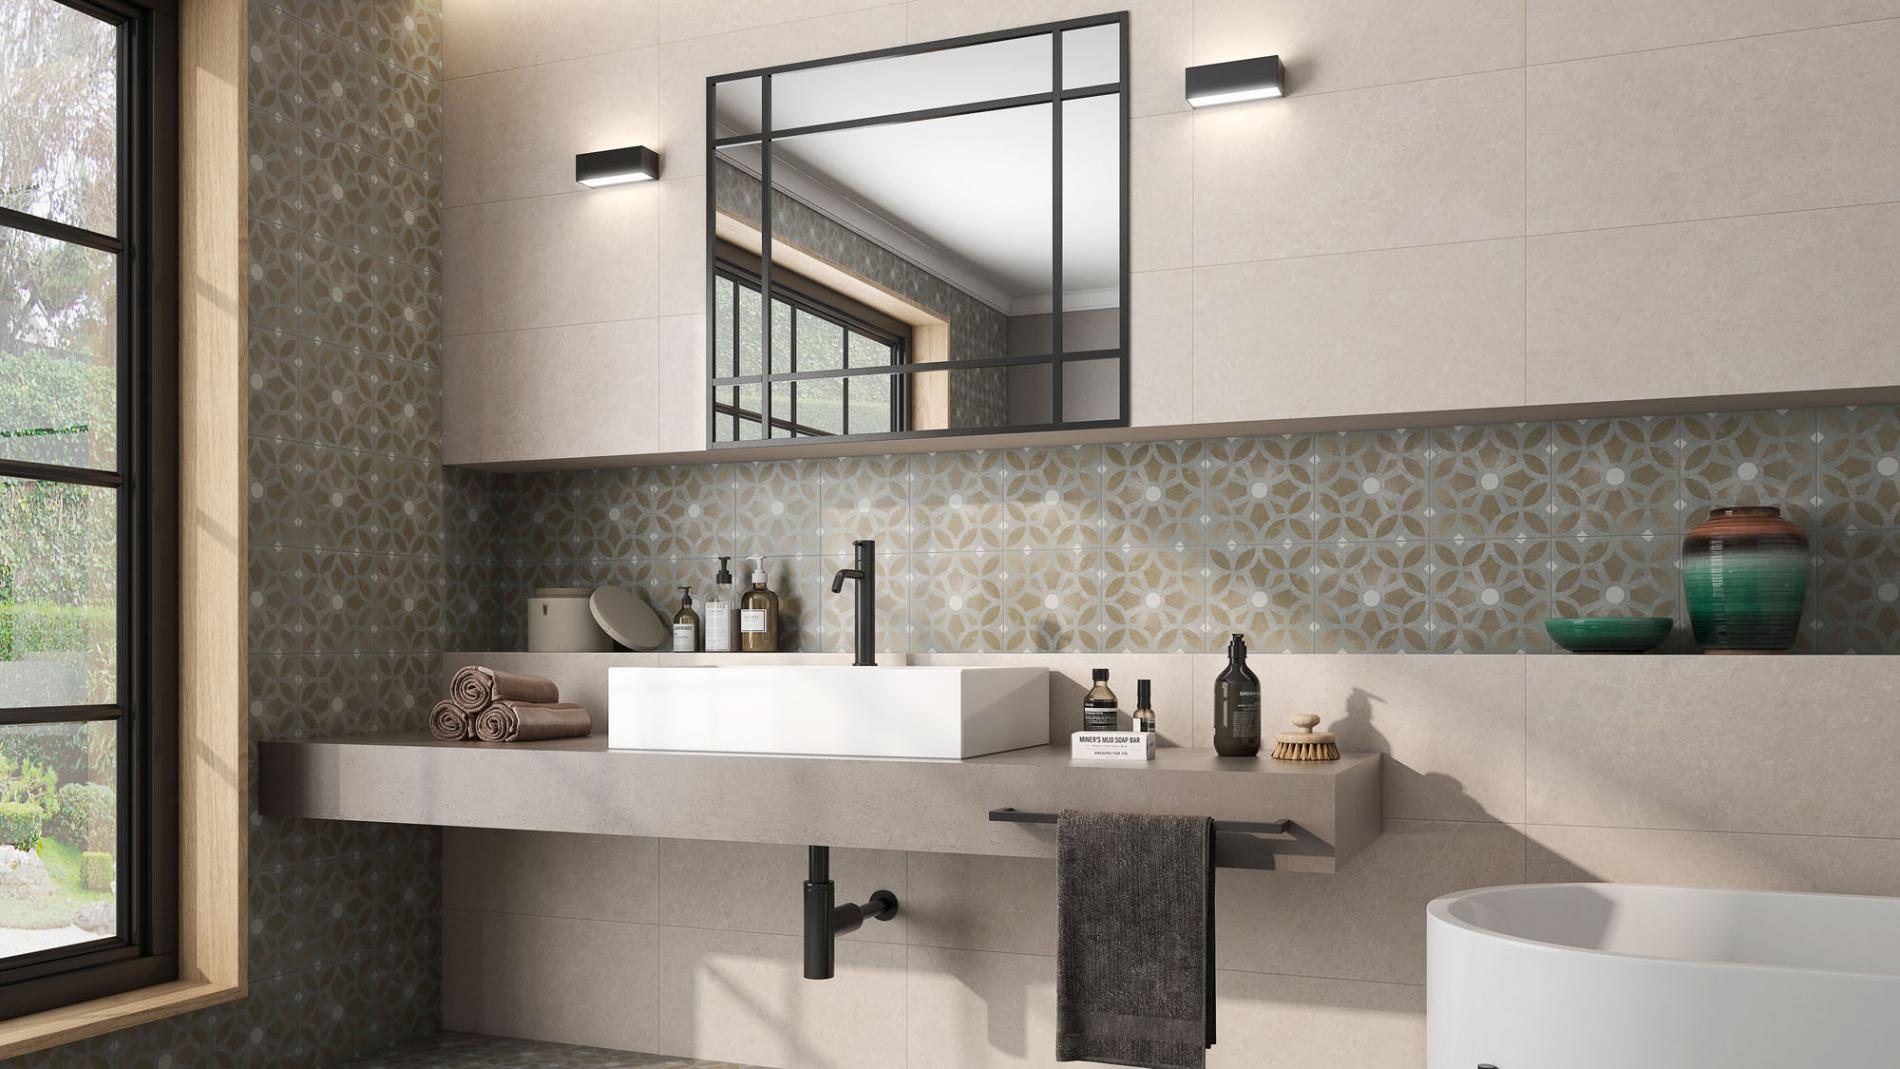 Cezzane tiles installed on bathroom backsplash